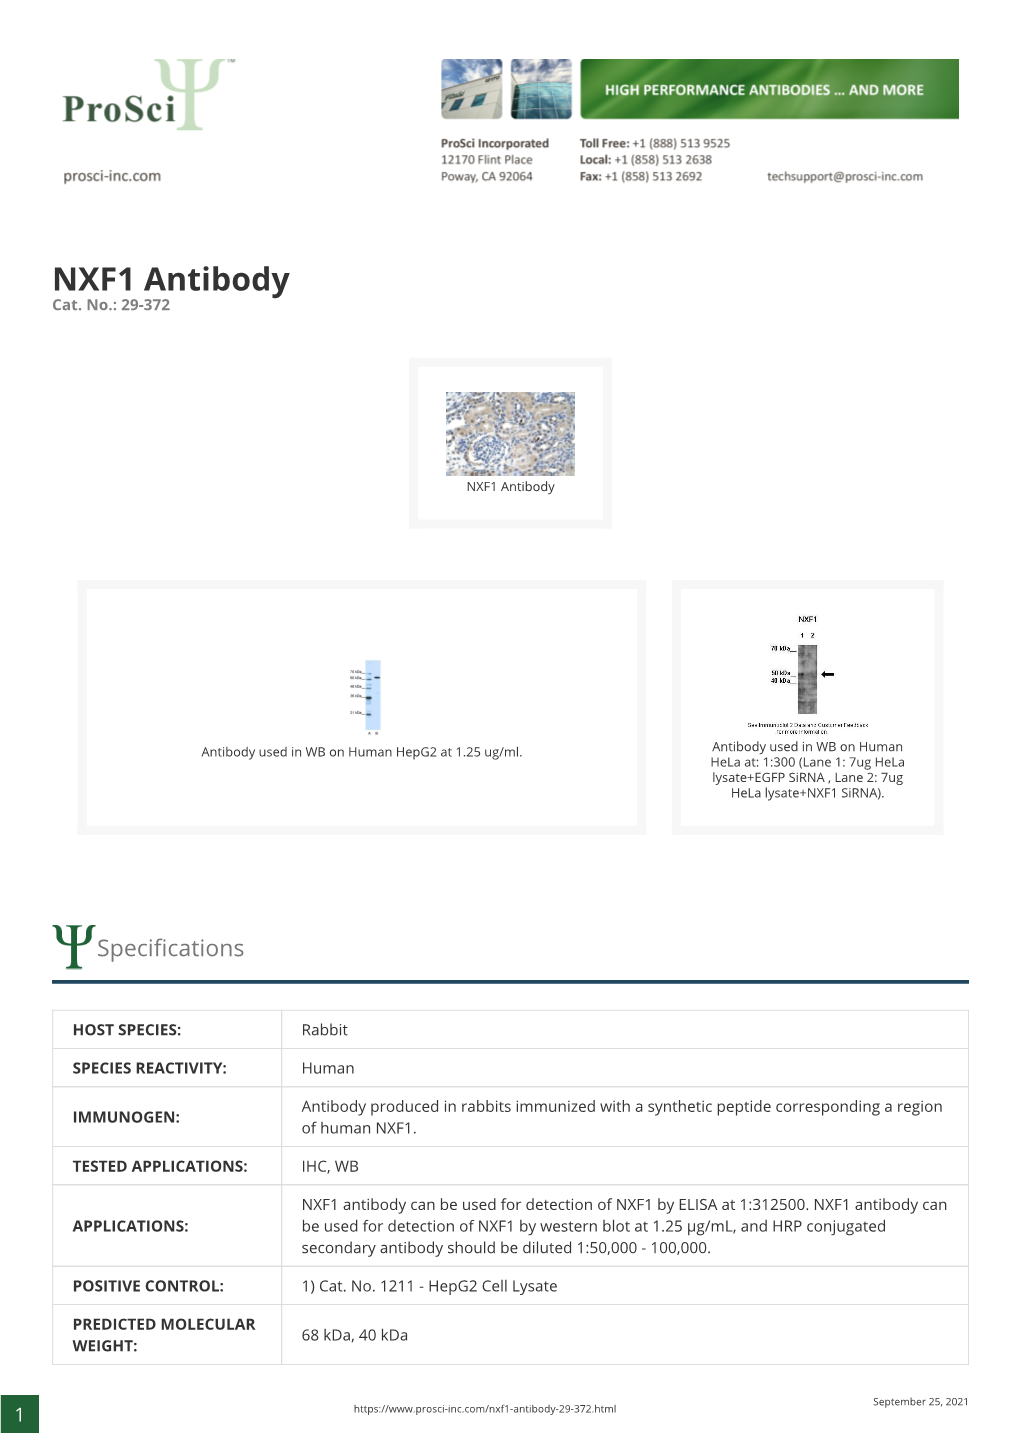 NXF1 Antibody Cat